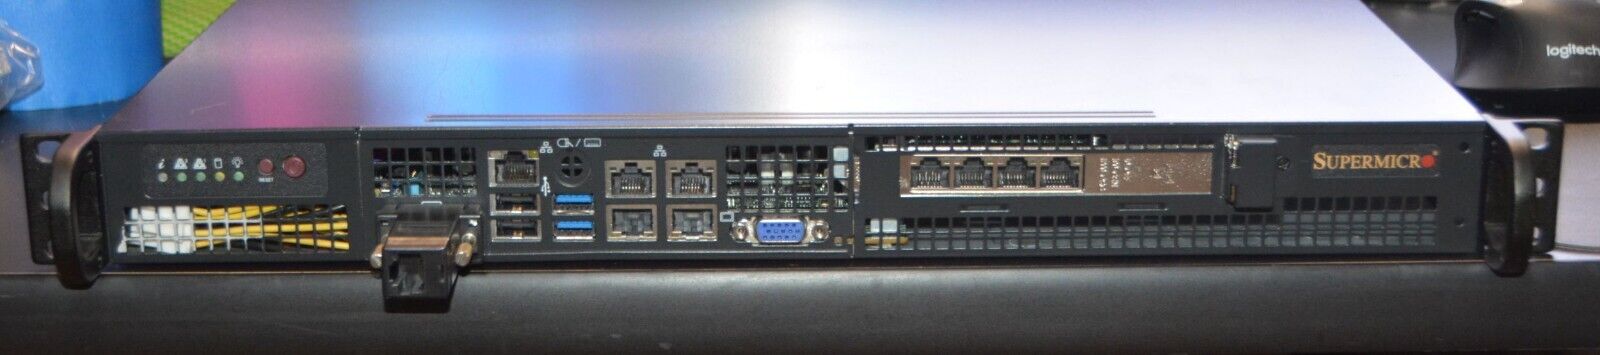 Supermicro 505-2 Mini-1U Server 5018A-FTN4 16GB 2.4ghz Atom + Rack Ears